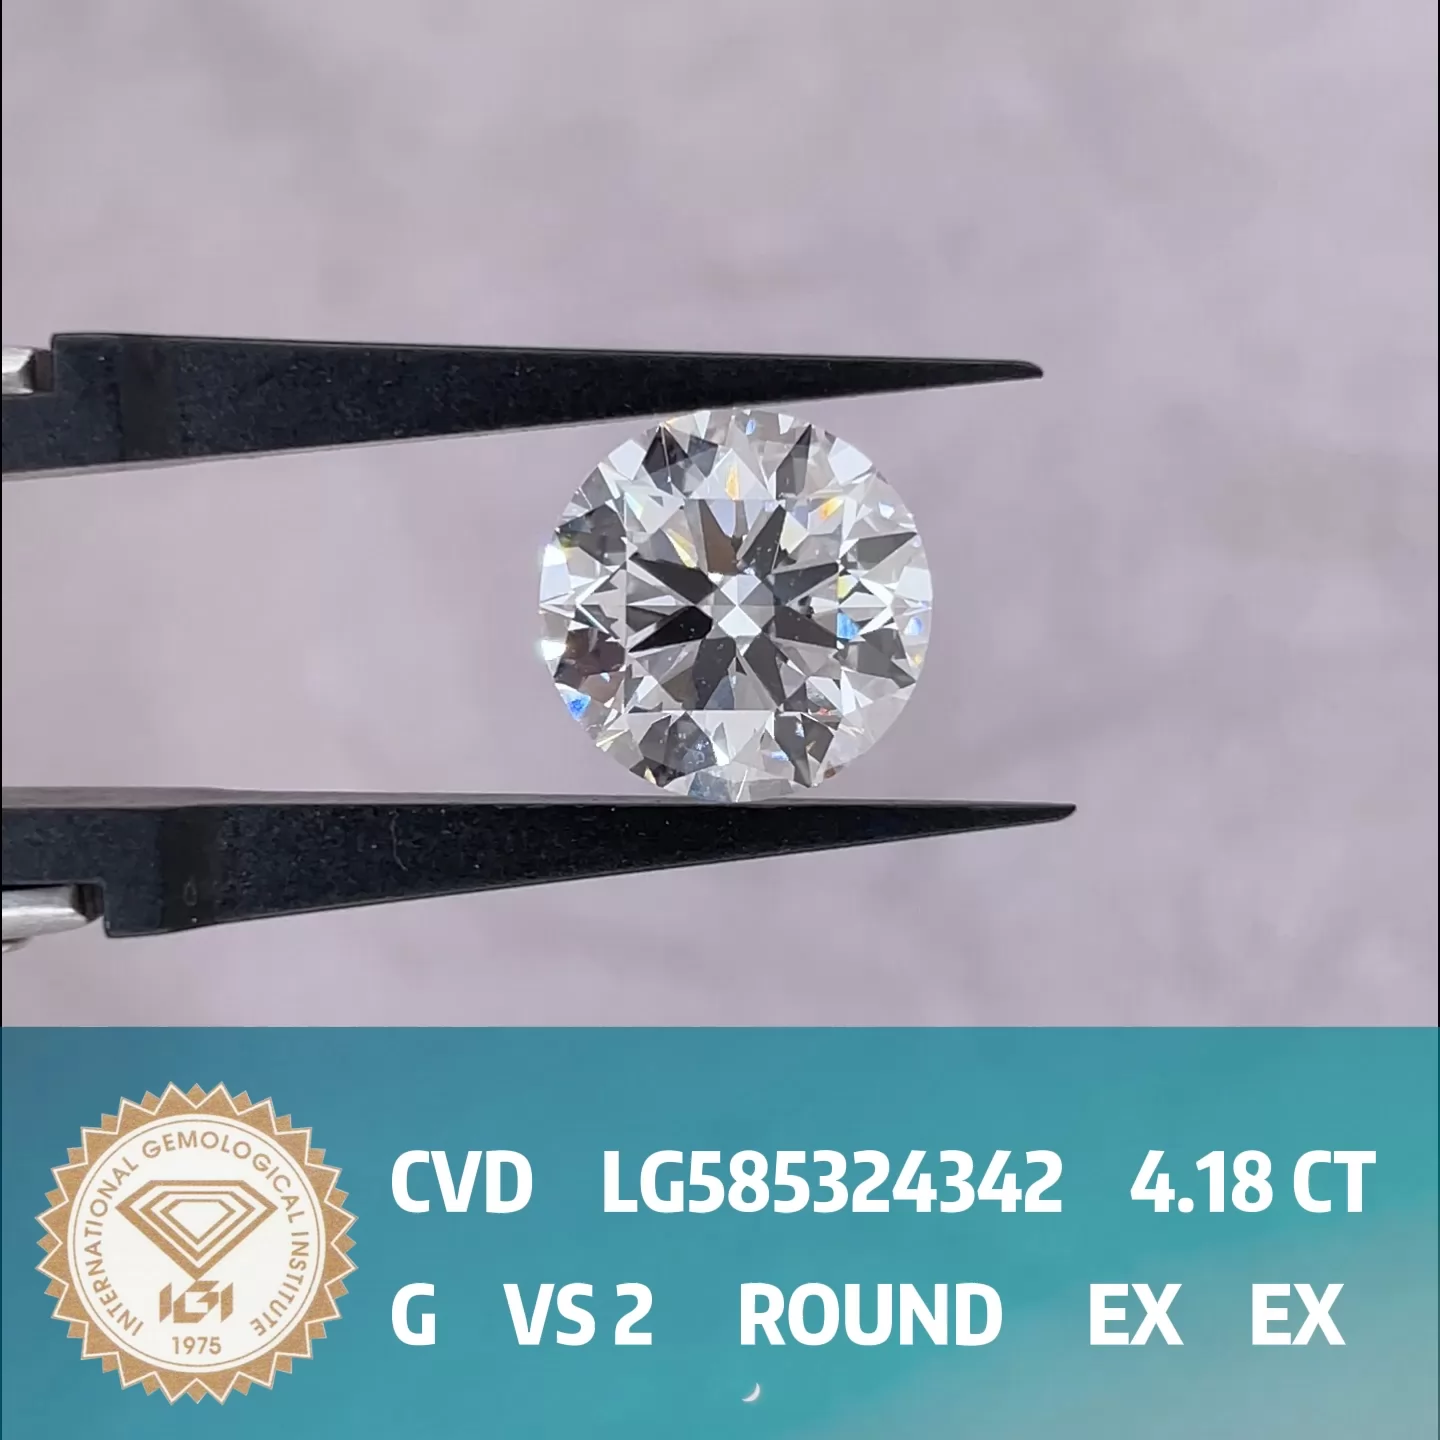 Round Brilliant Cut 4.18ct G Color CVD Lab Grown Diamond